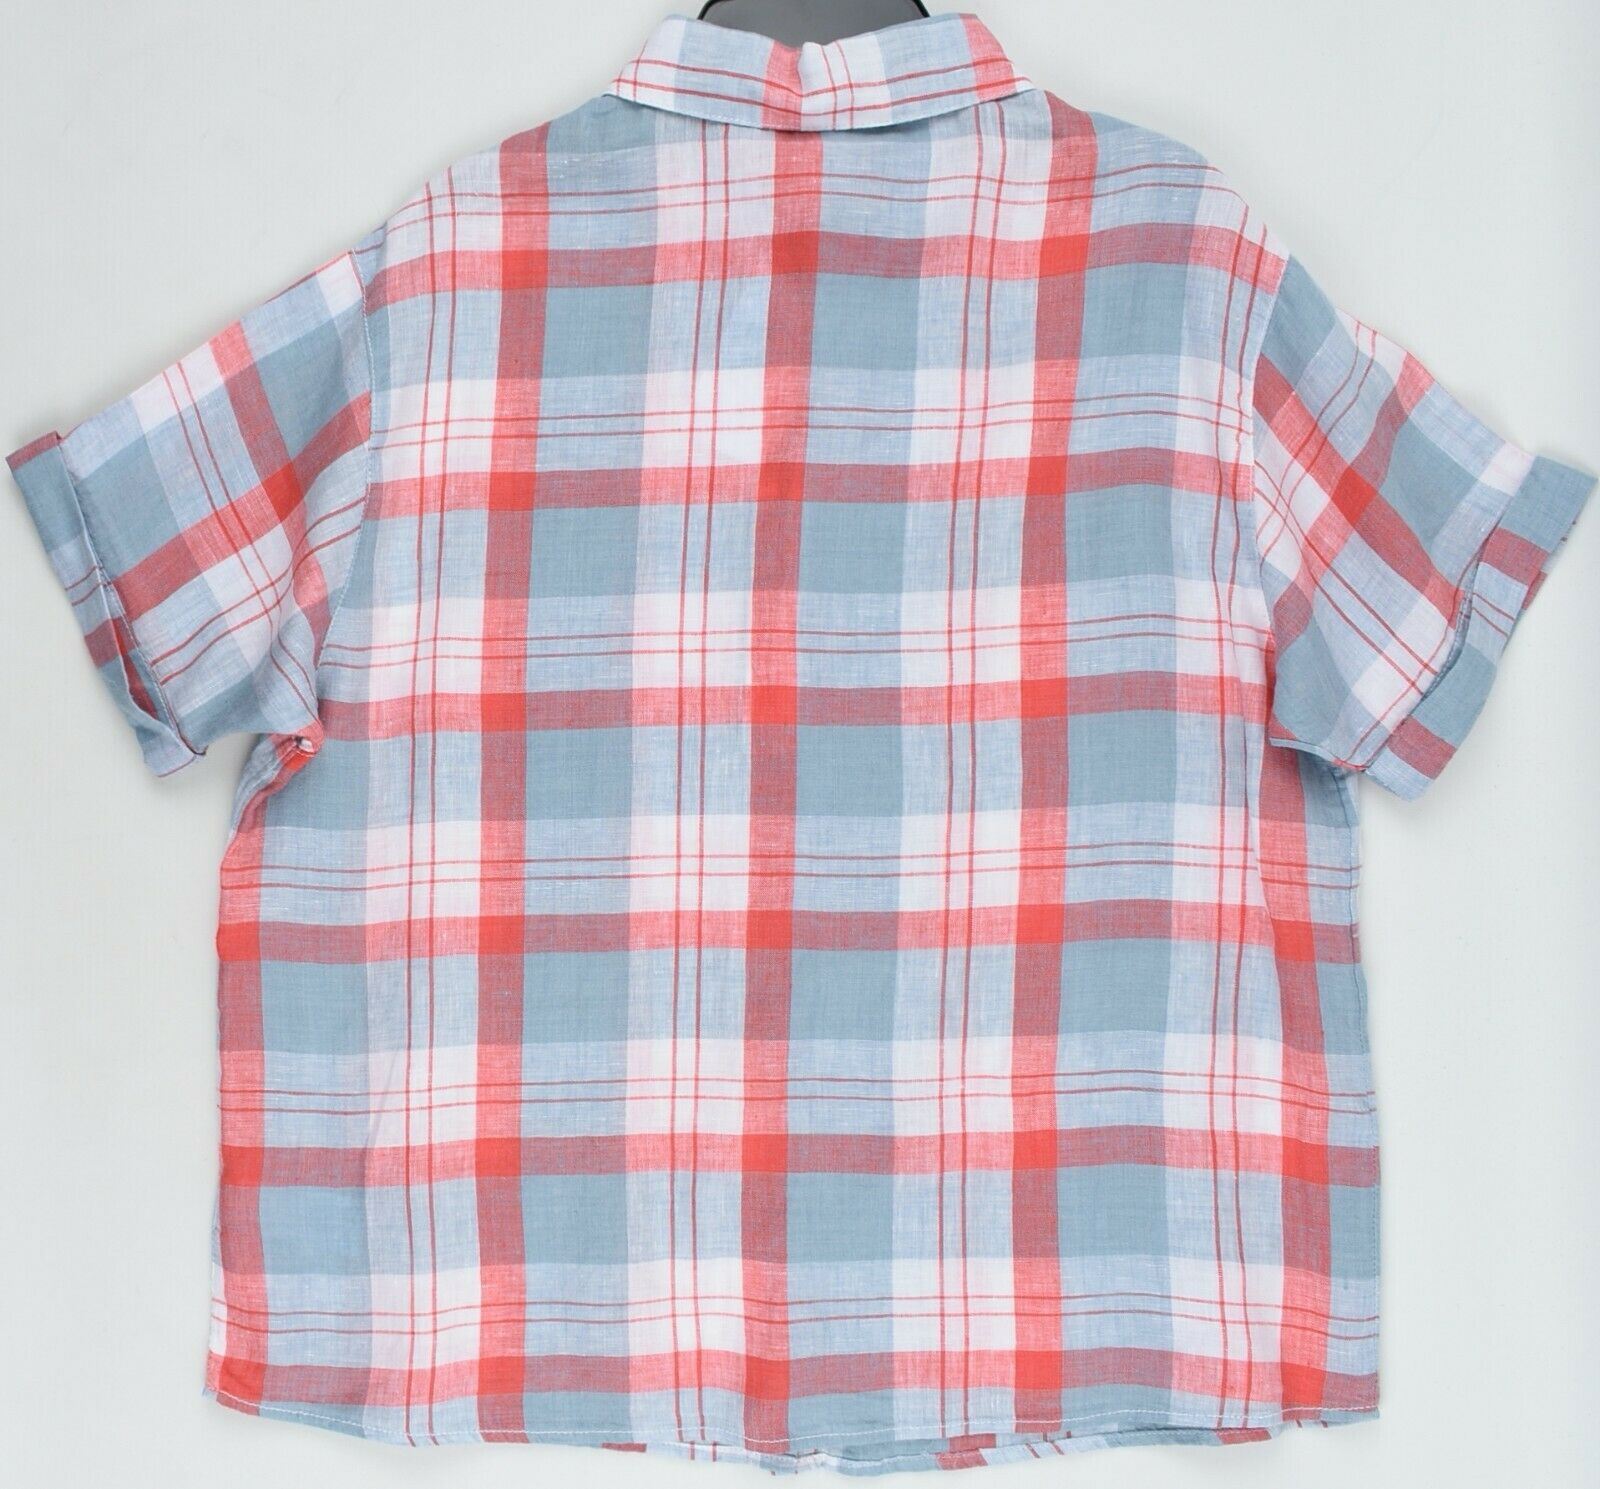 NICOLE MILLER Women's Checked Short Sleeve Shirt, 100% Linen, size S